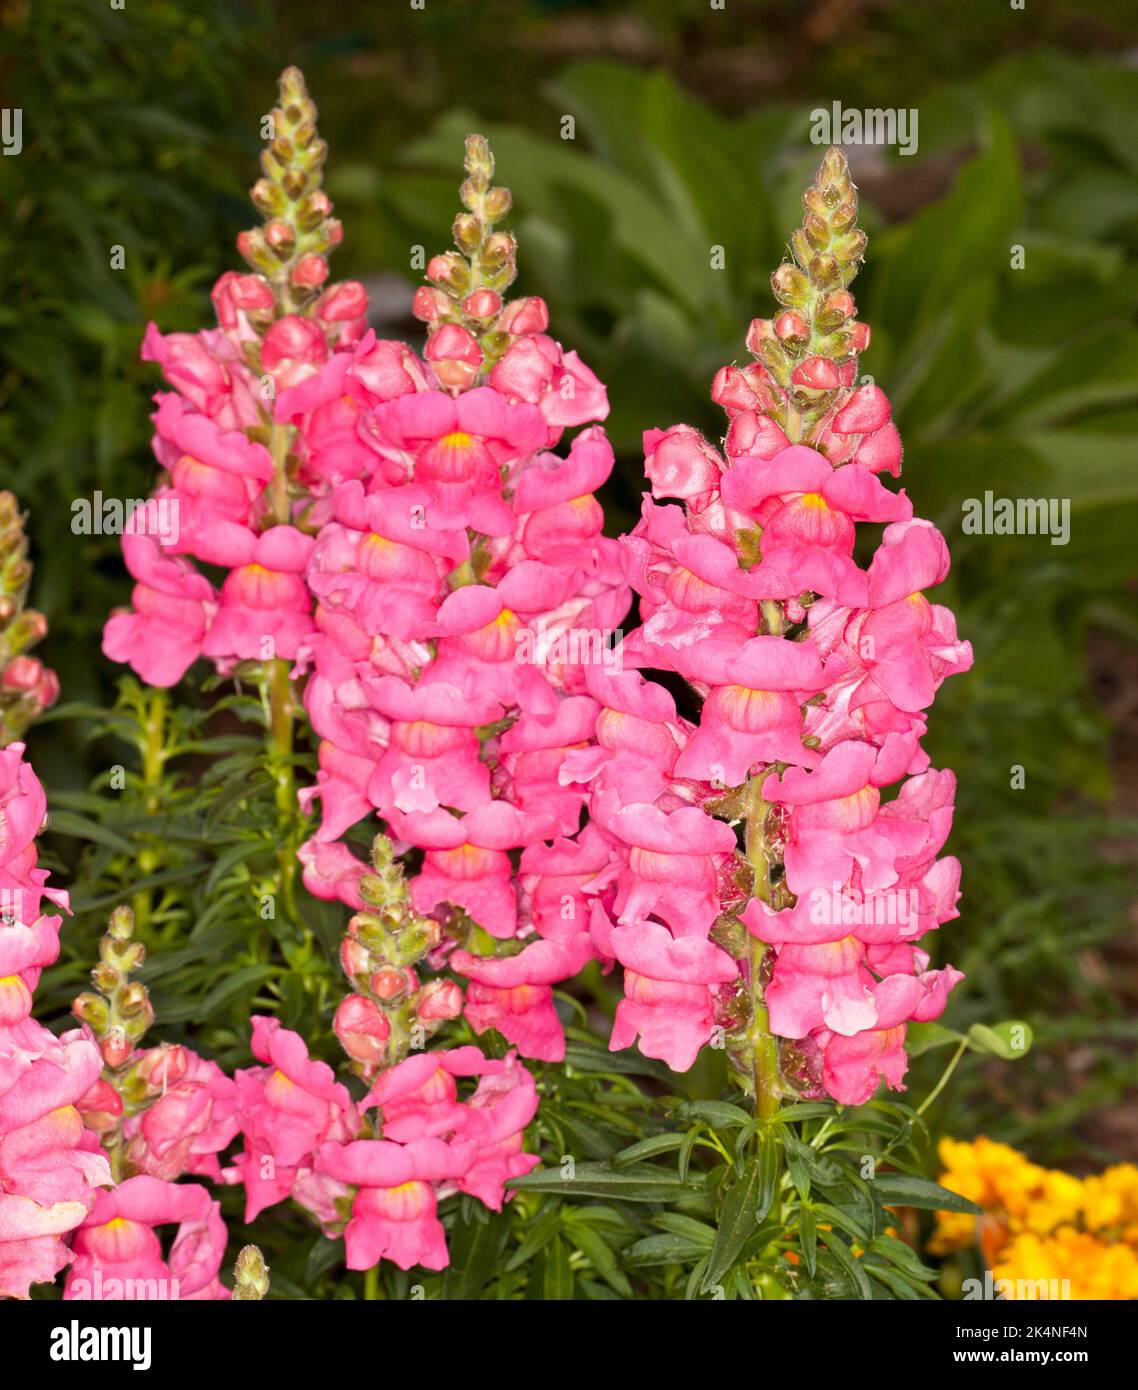 Antirrhinum 'Tetra mix' perfumed flowers Stock Photo